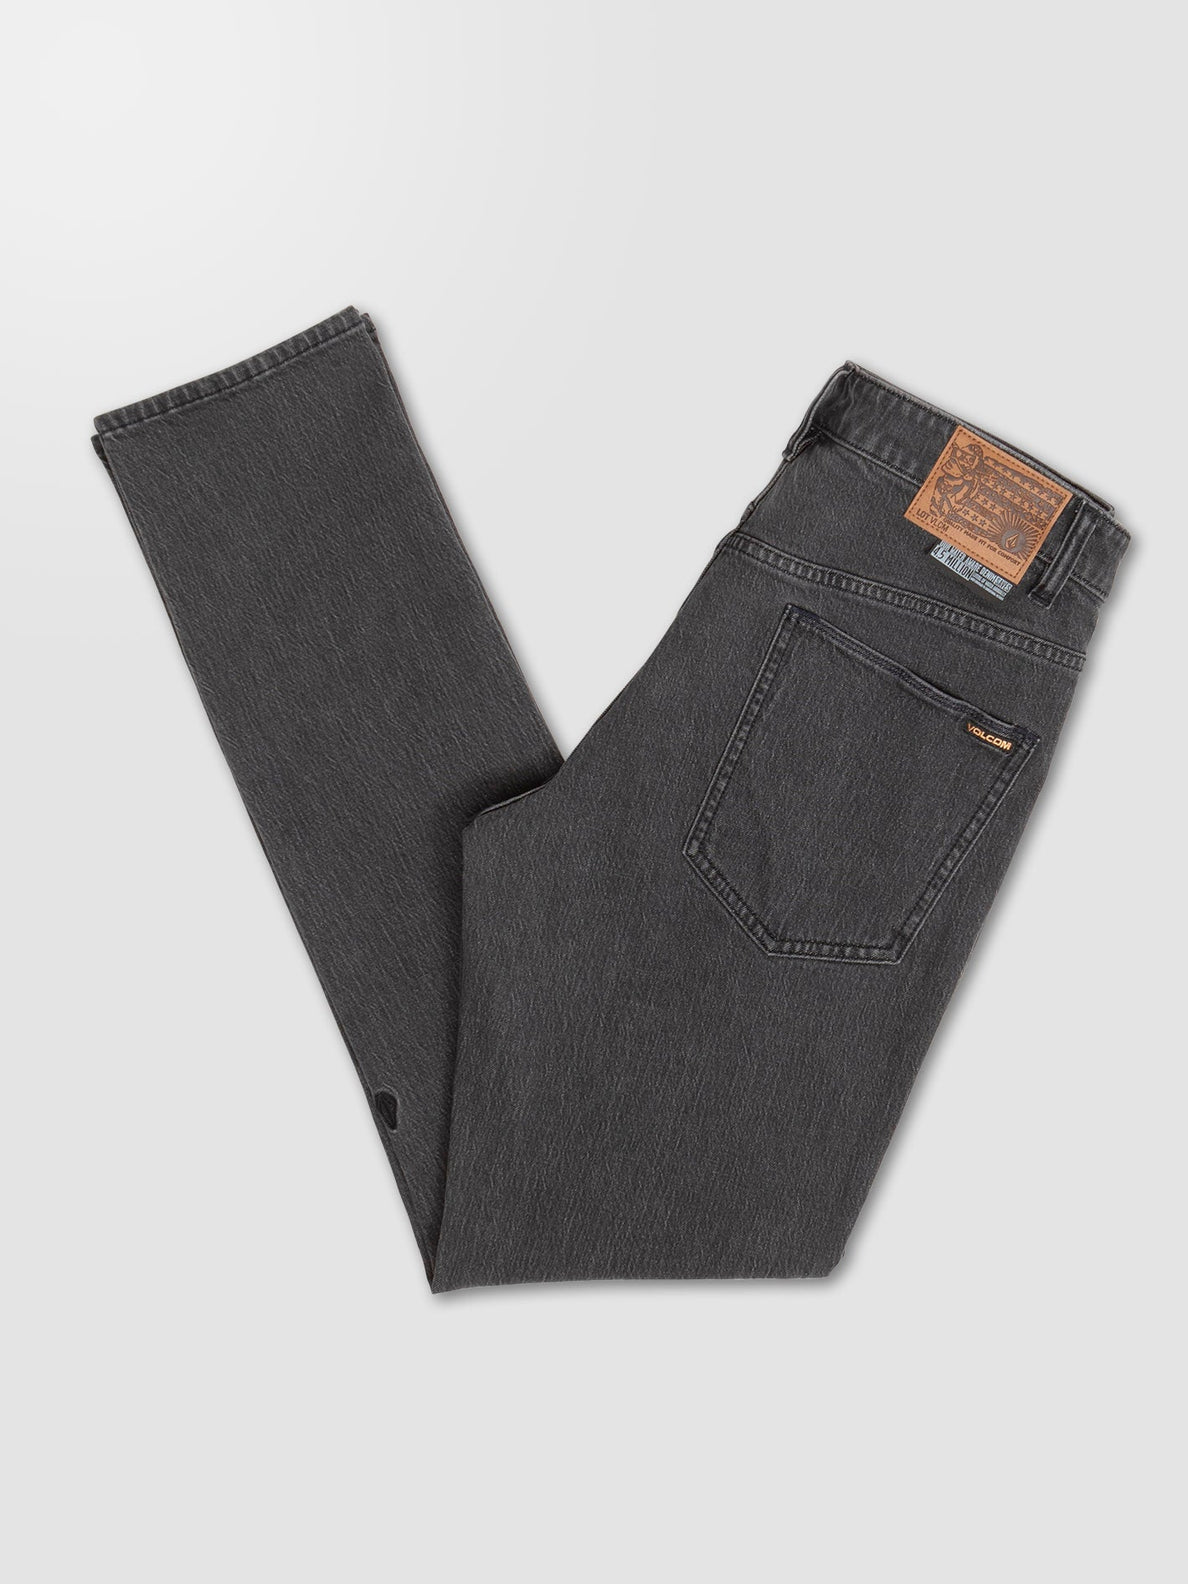 Volcom Solver Tapered Denim Jeans – Stoney Black